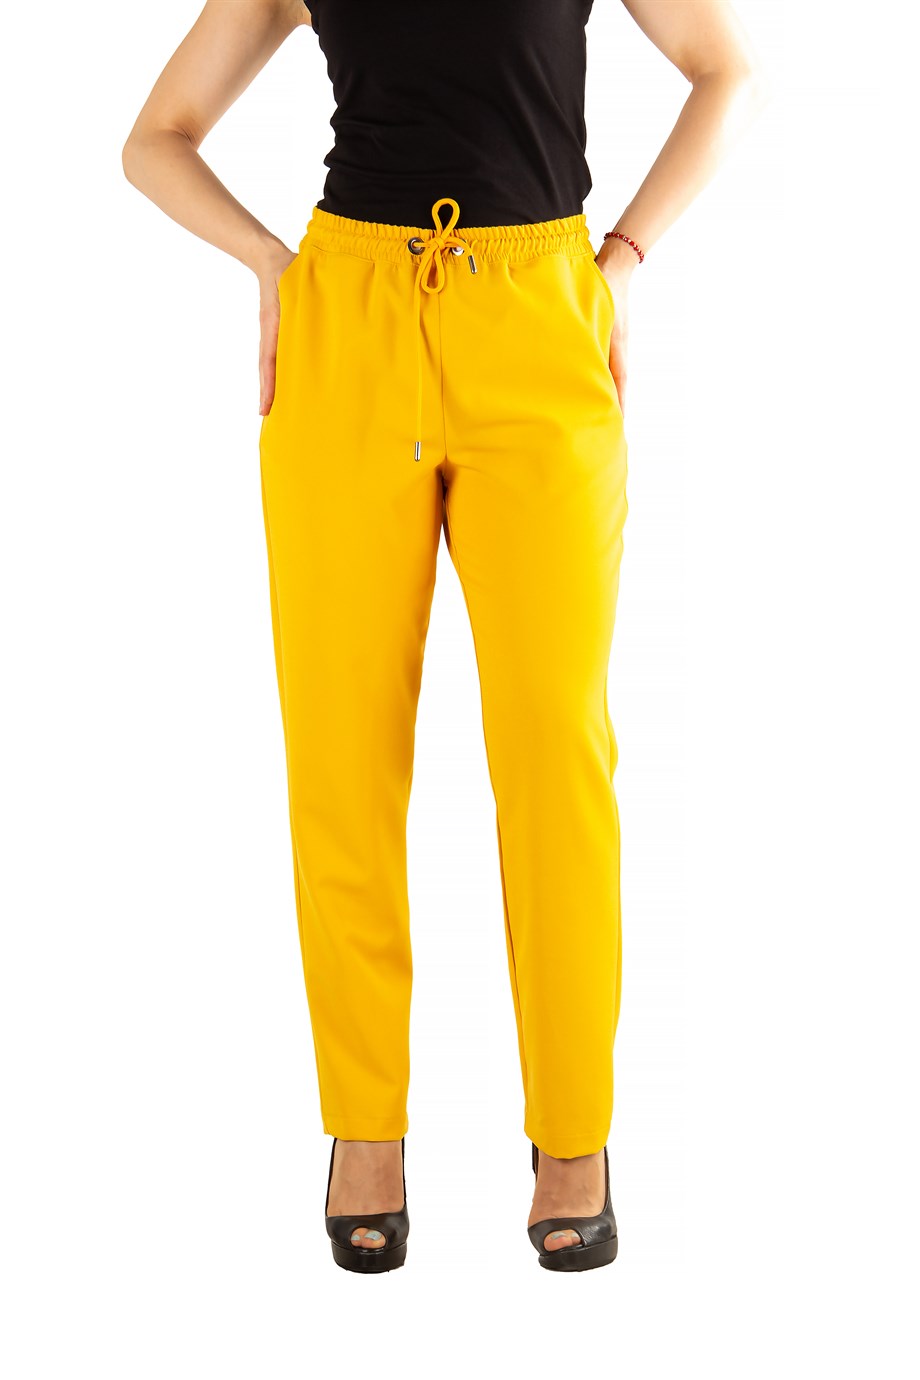 Buy Light Yellow Slim Pants Online - Shop for W